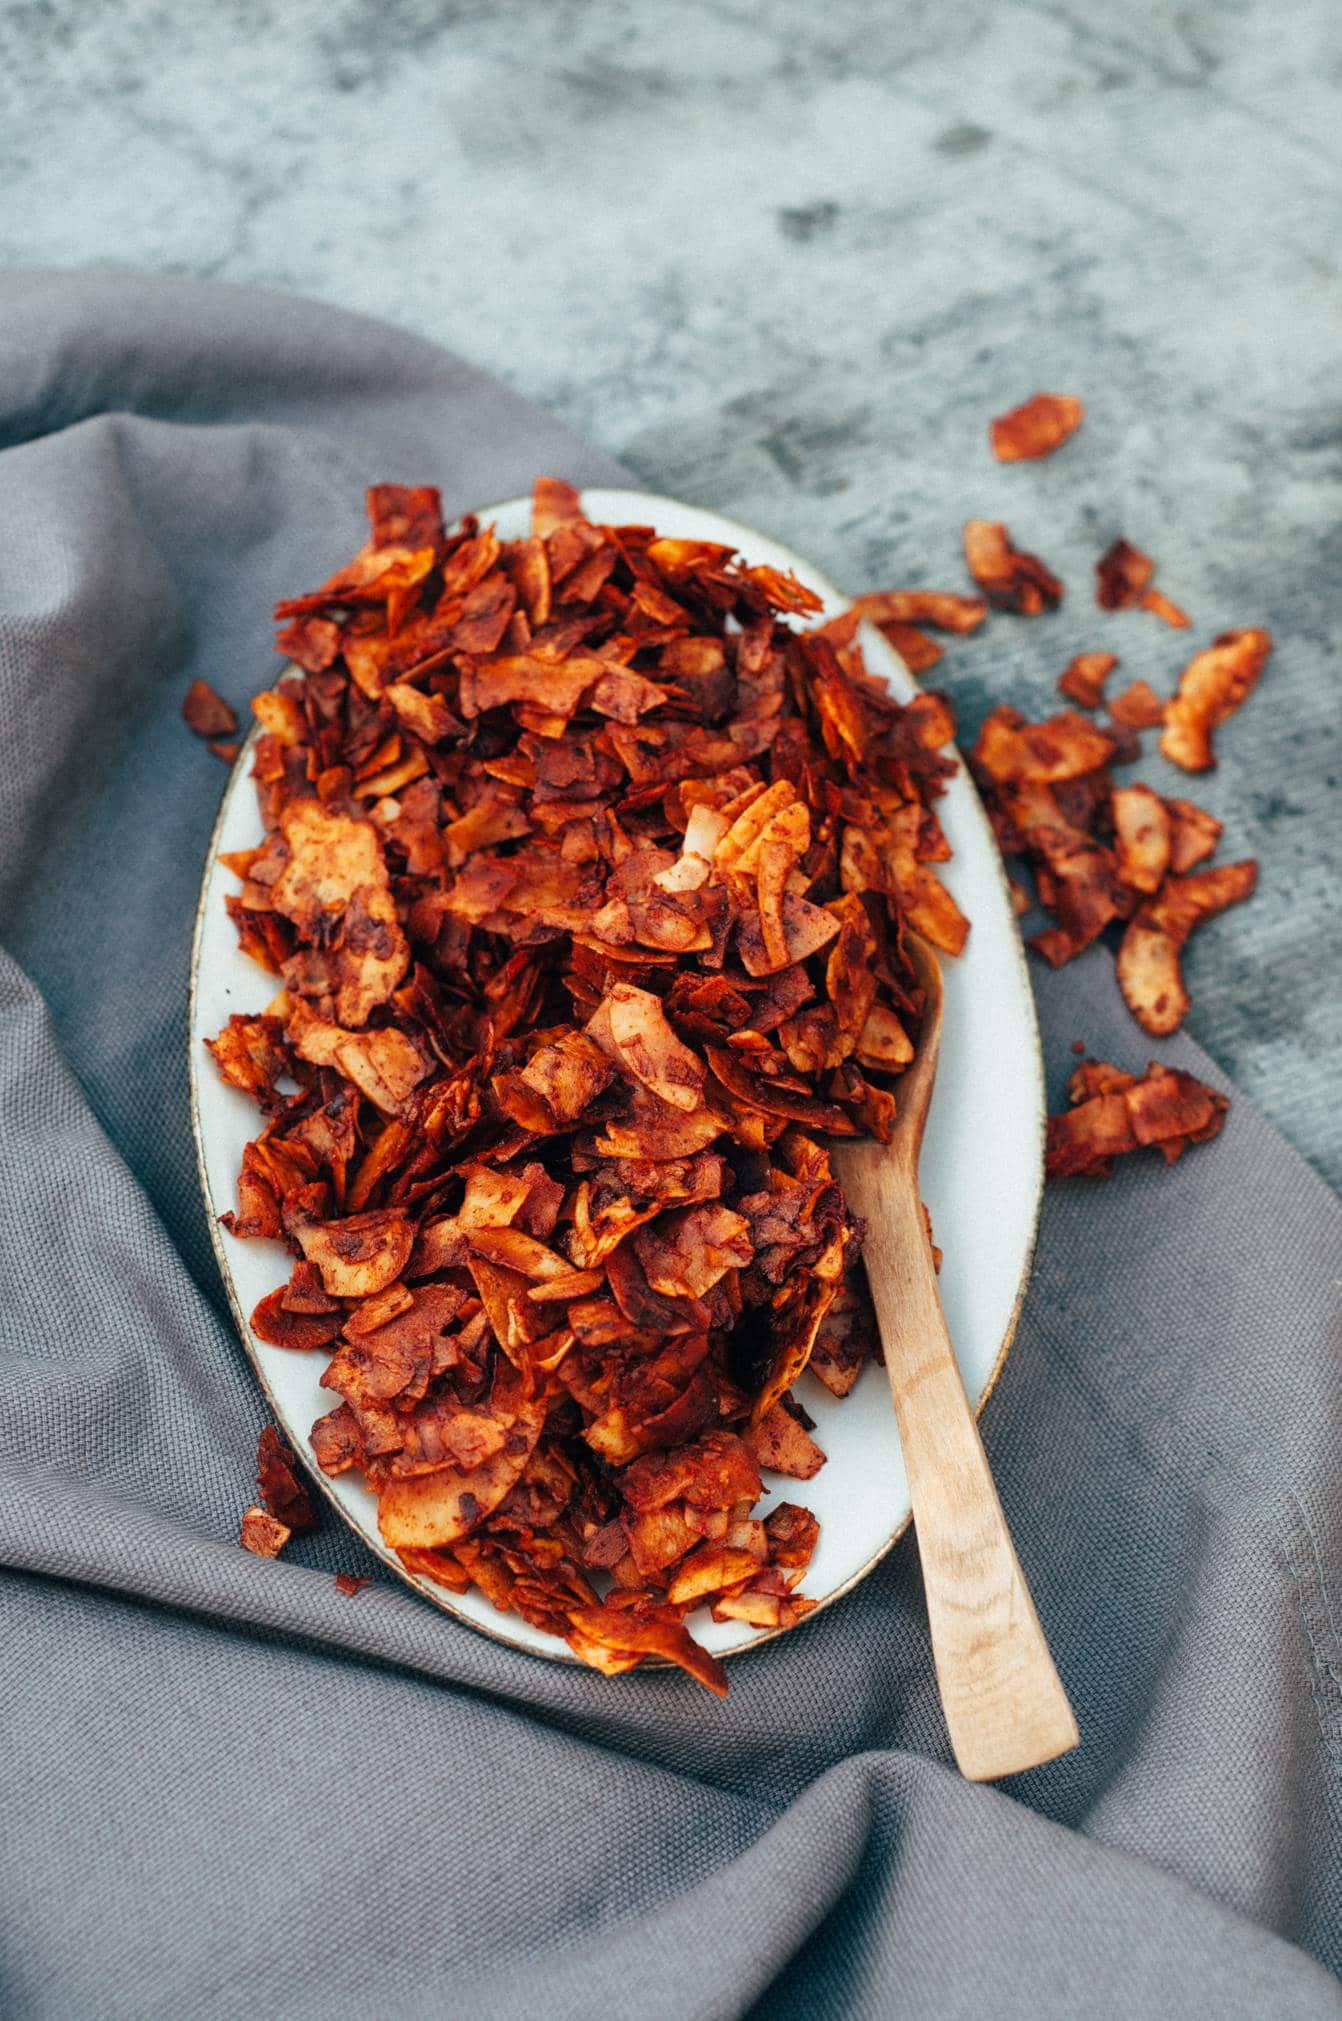 HOW TO make vegan bacon recipe yourself